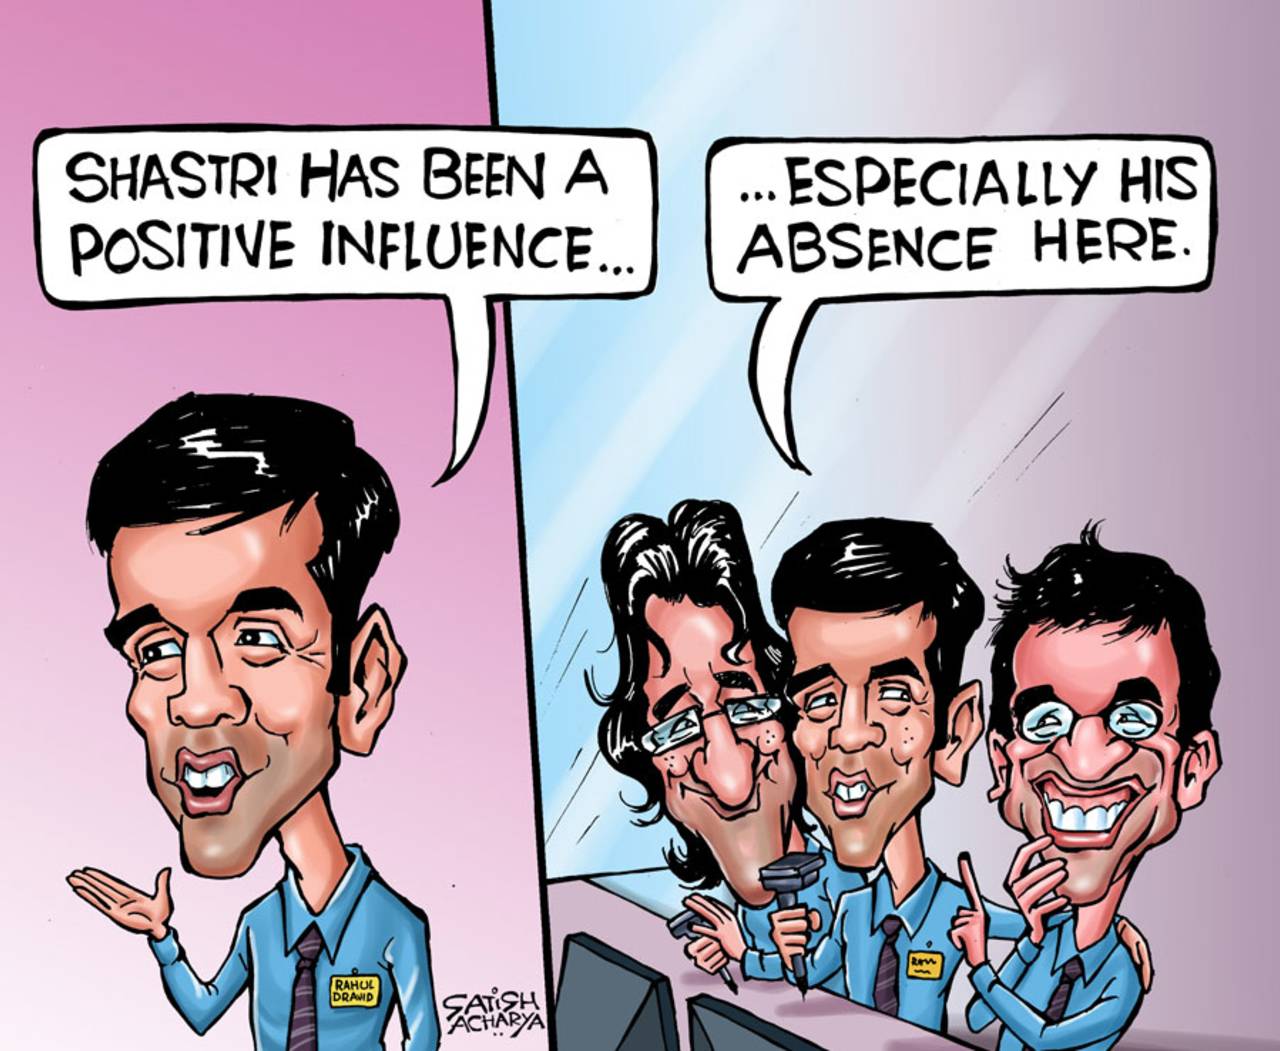 Cartoon: Shastri's influence